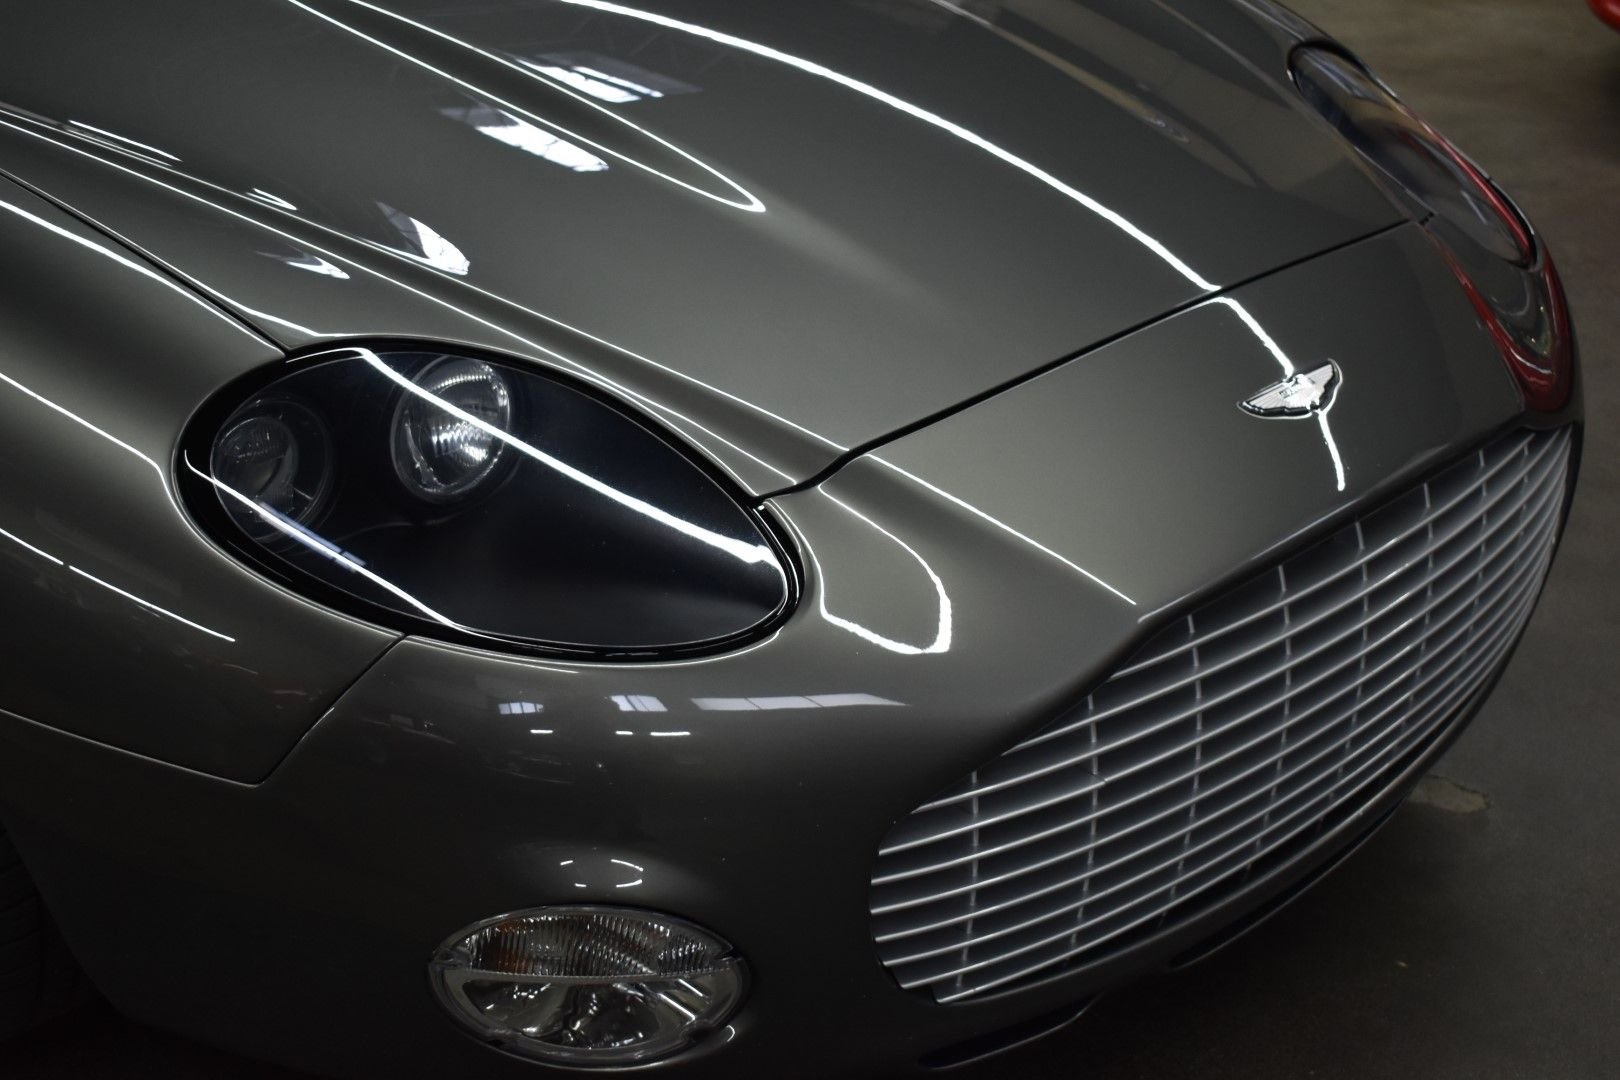 Aston Martin Db7 Zagato Wallpapers